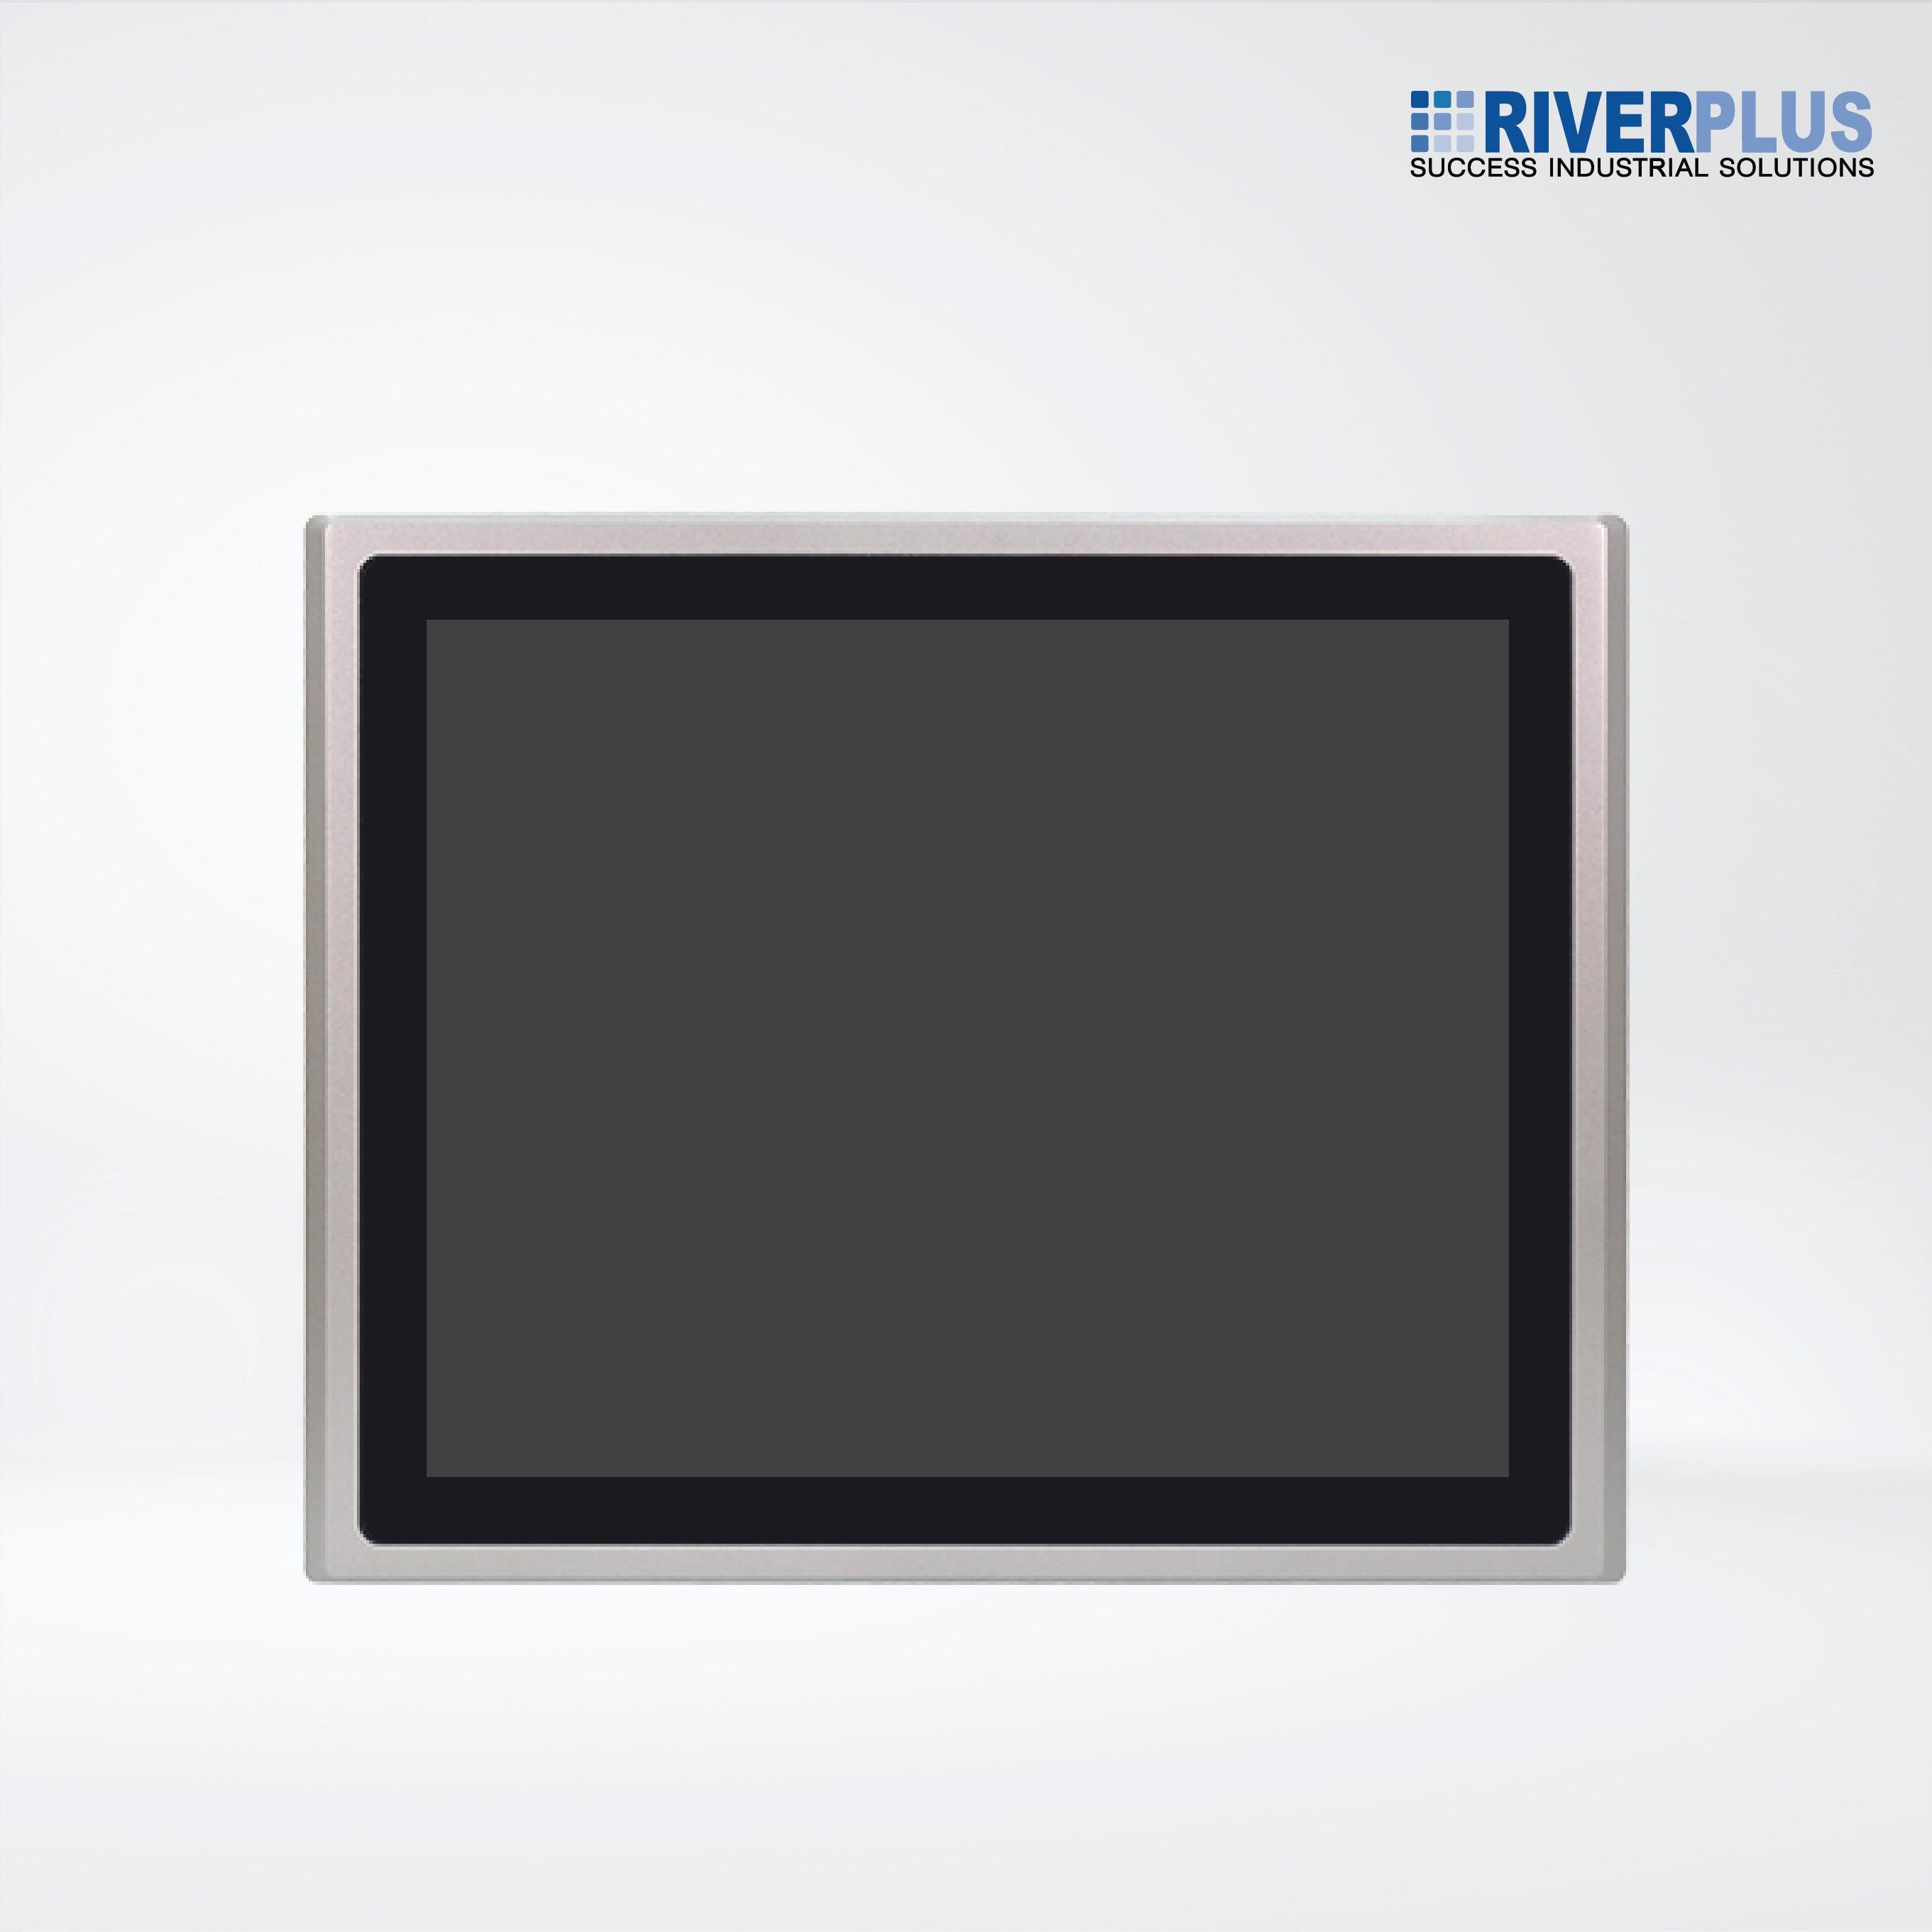 ARCHMI-819 19" Intel Celeron N2930/ Atom E3845, Fanless Industrial Compact Size Panel PC - Riverplus